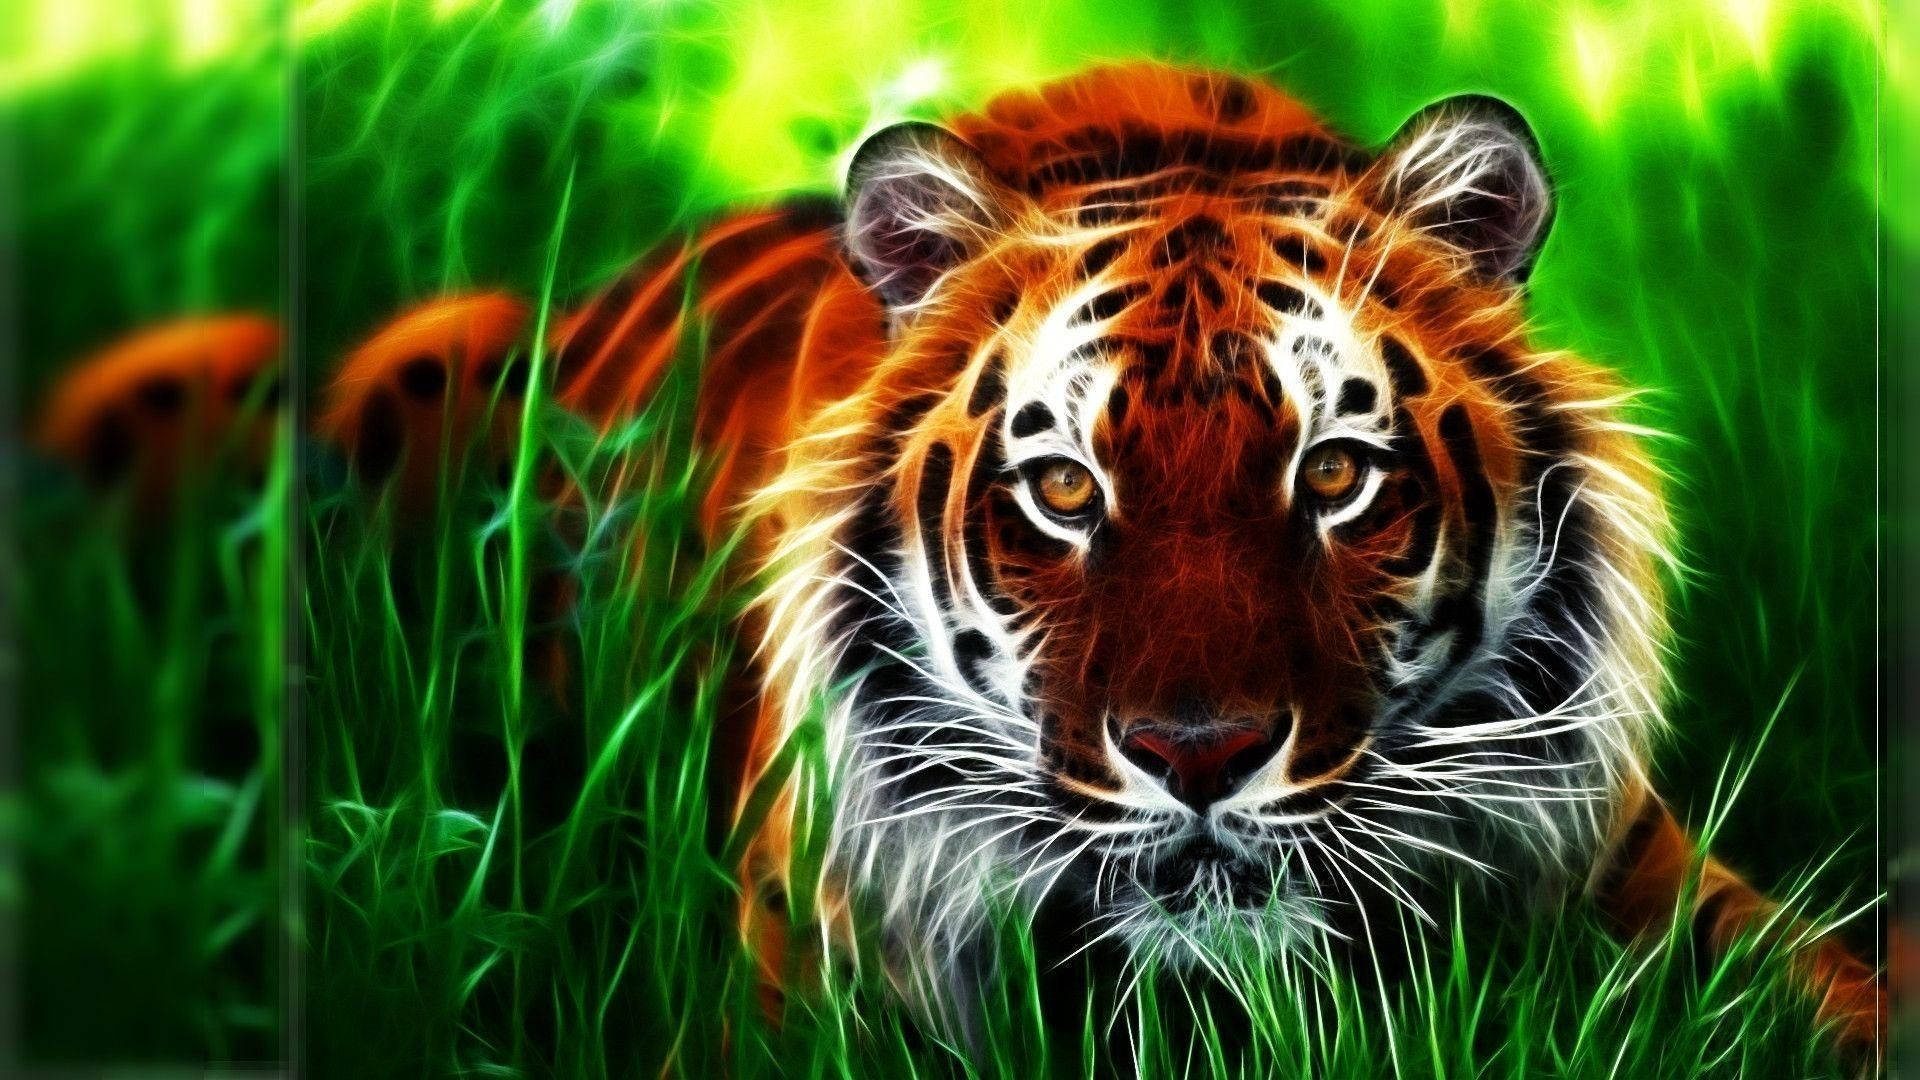 Astonishing Live 3d Roaring Tiger Art